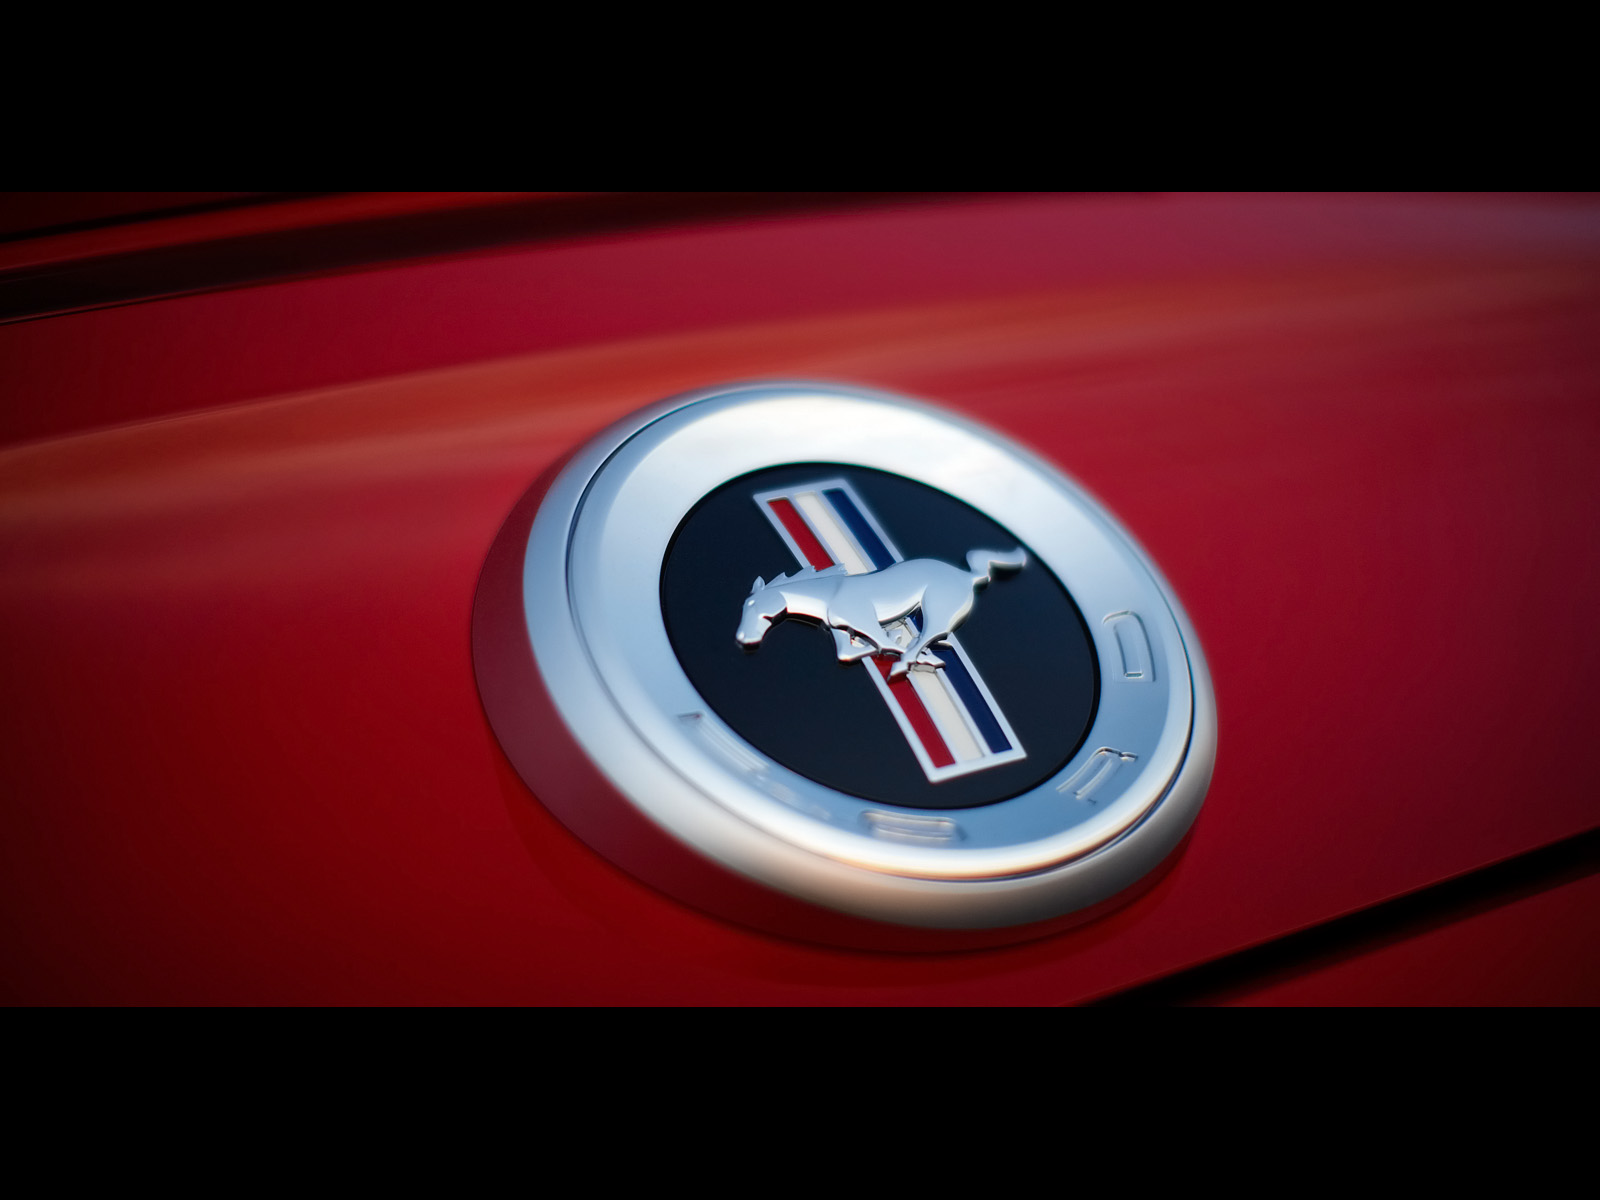 2010 Ford Mustang   Rear Emblem   1600x1200   Wallpaper 1600x1200